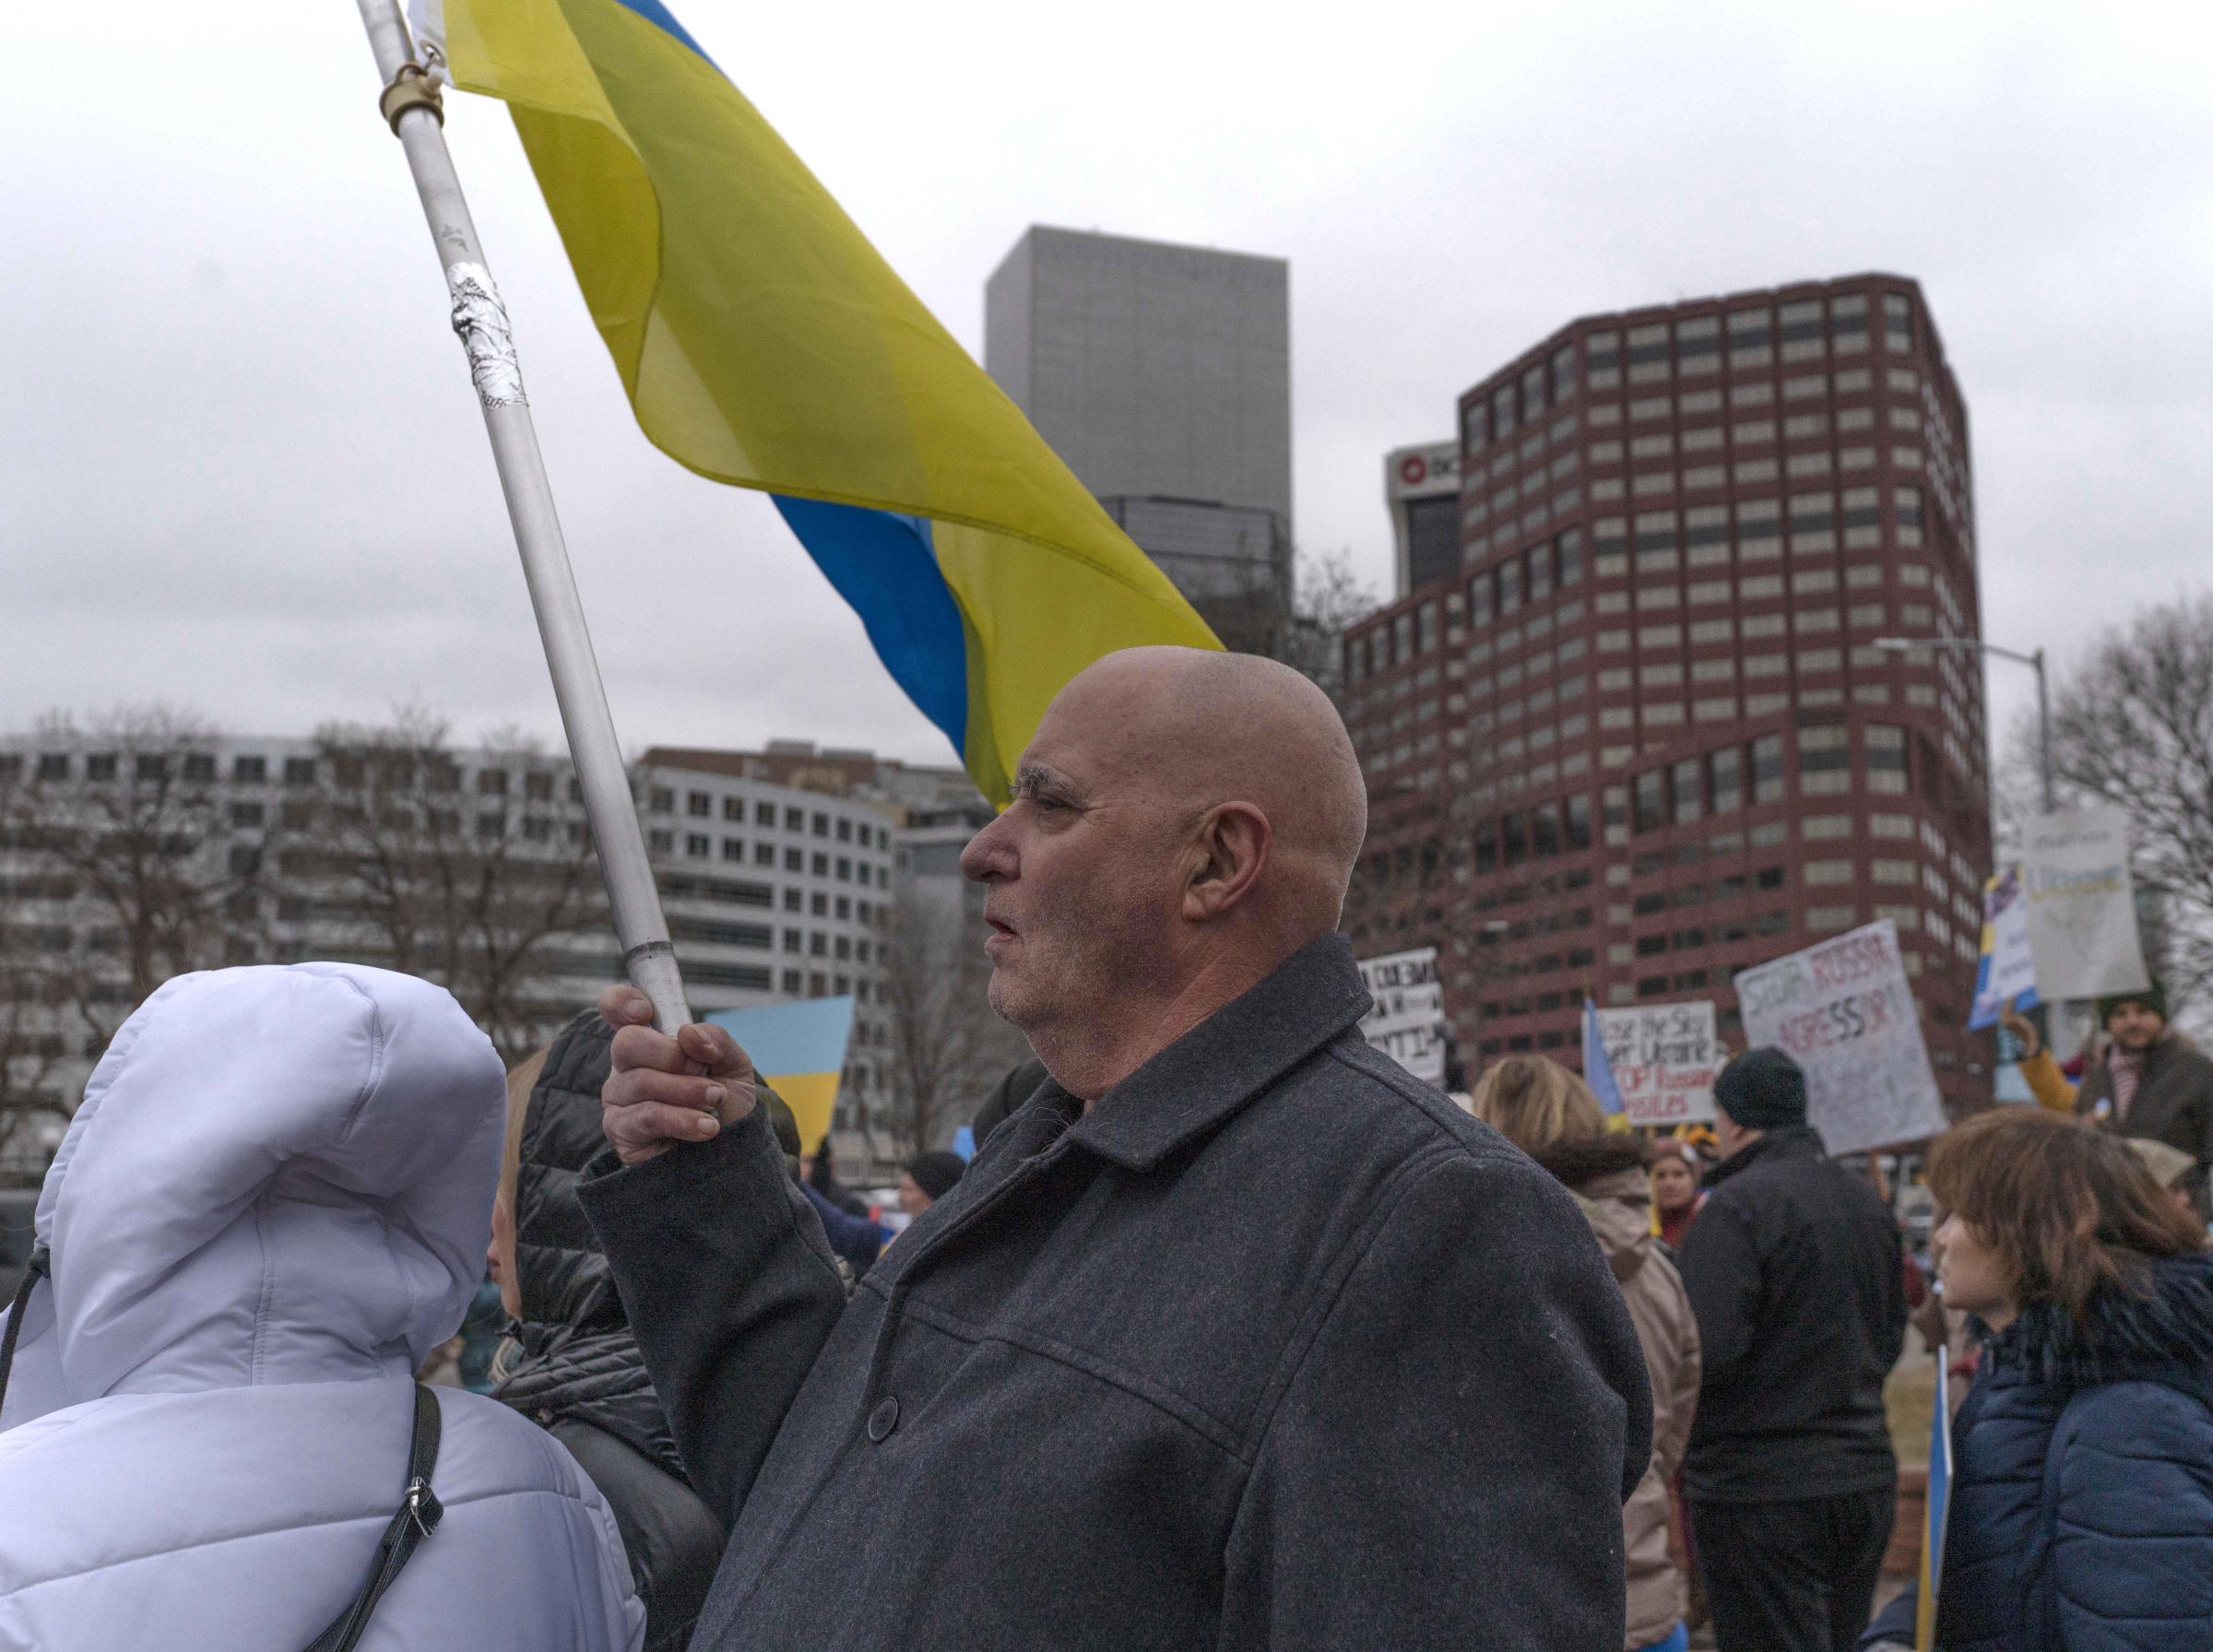 Slava Ukraini - A man walks by with a Ukrainian flag in hand during a...